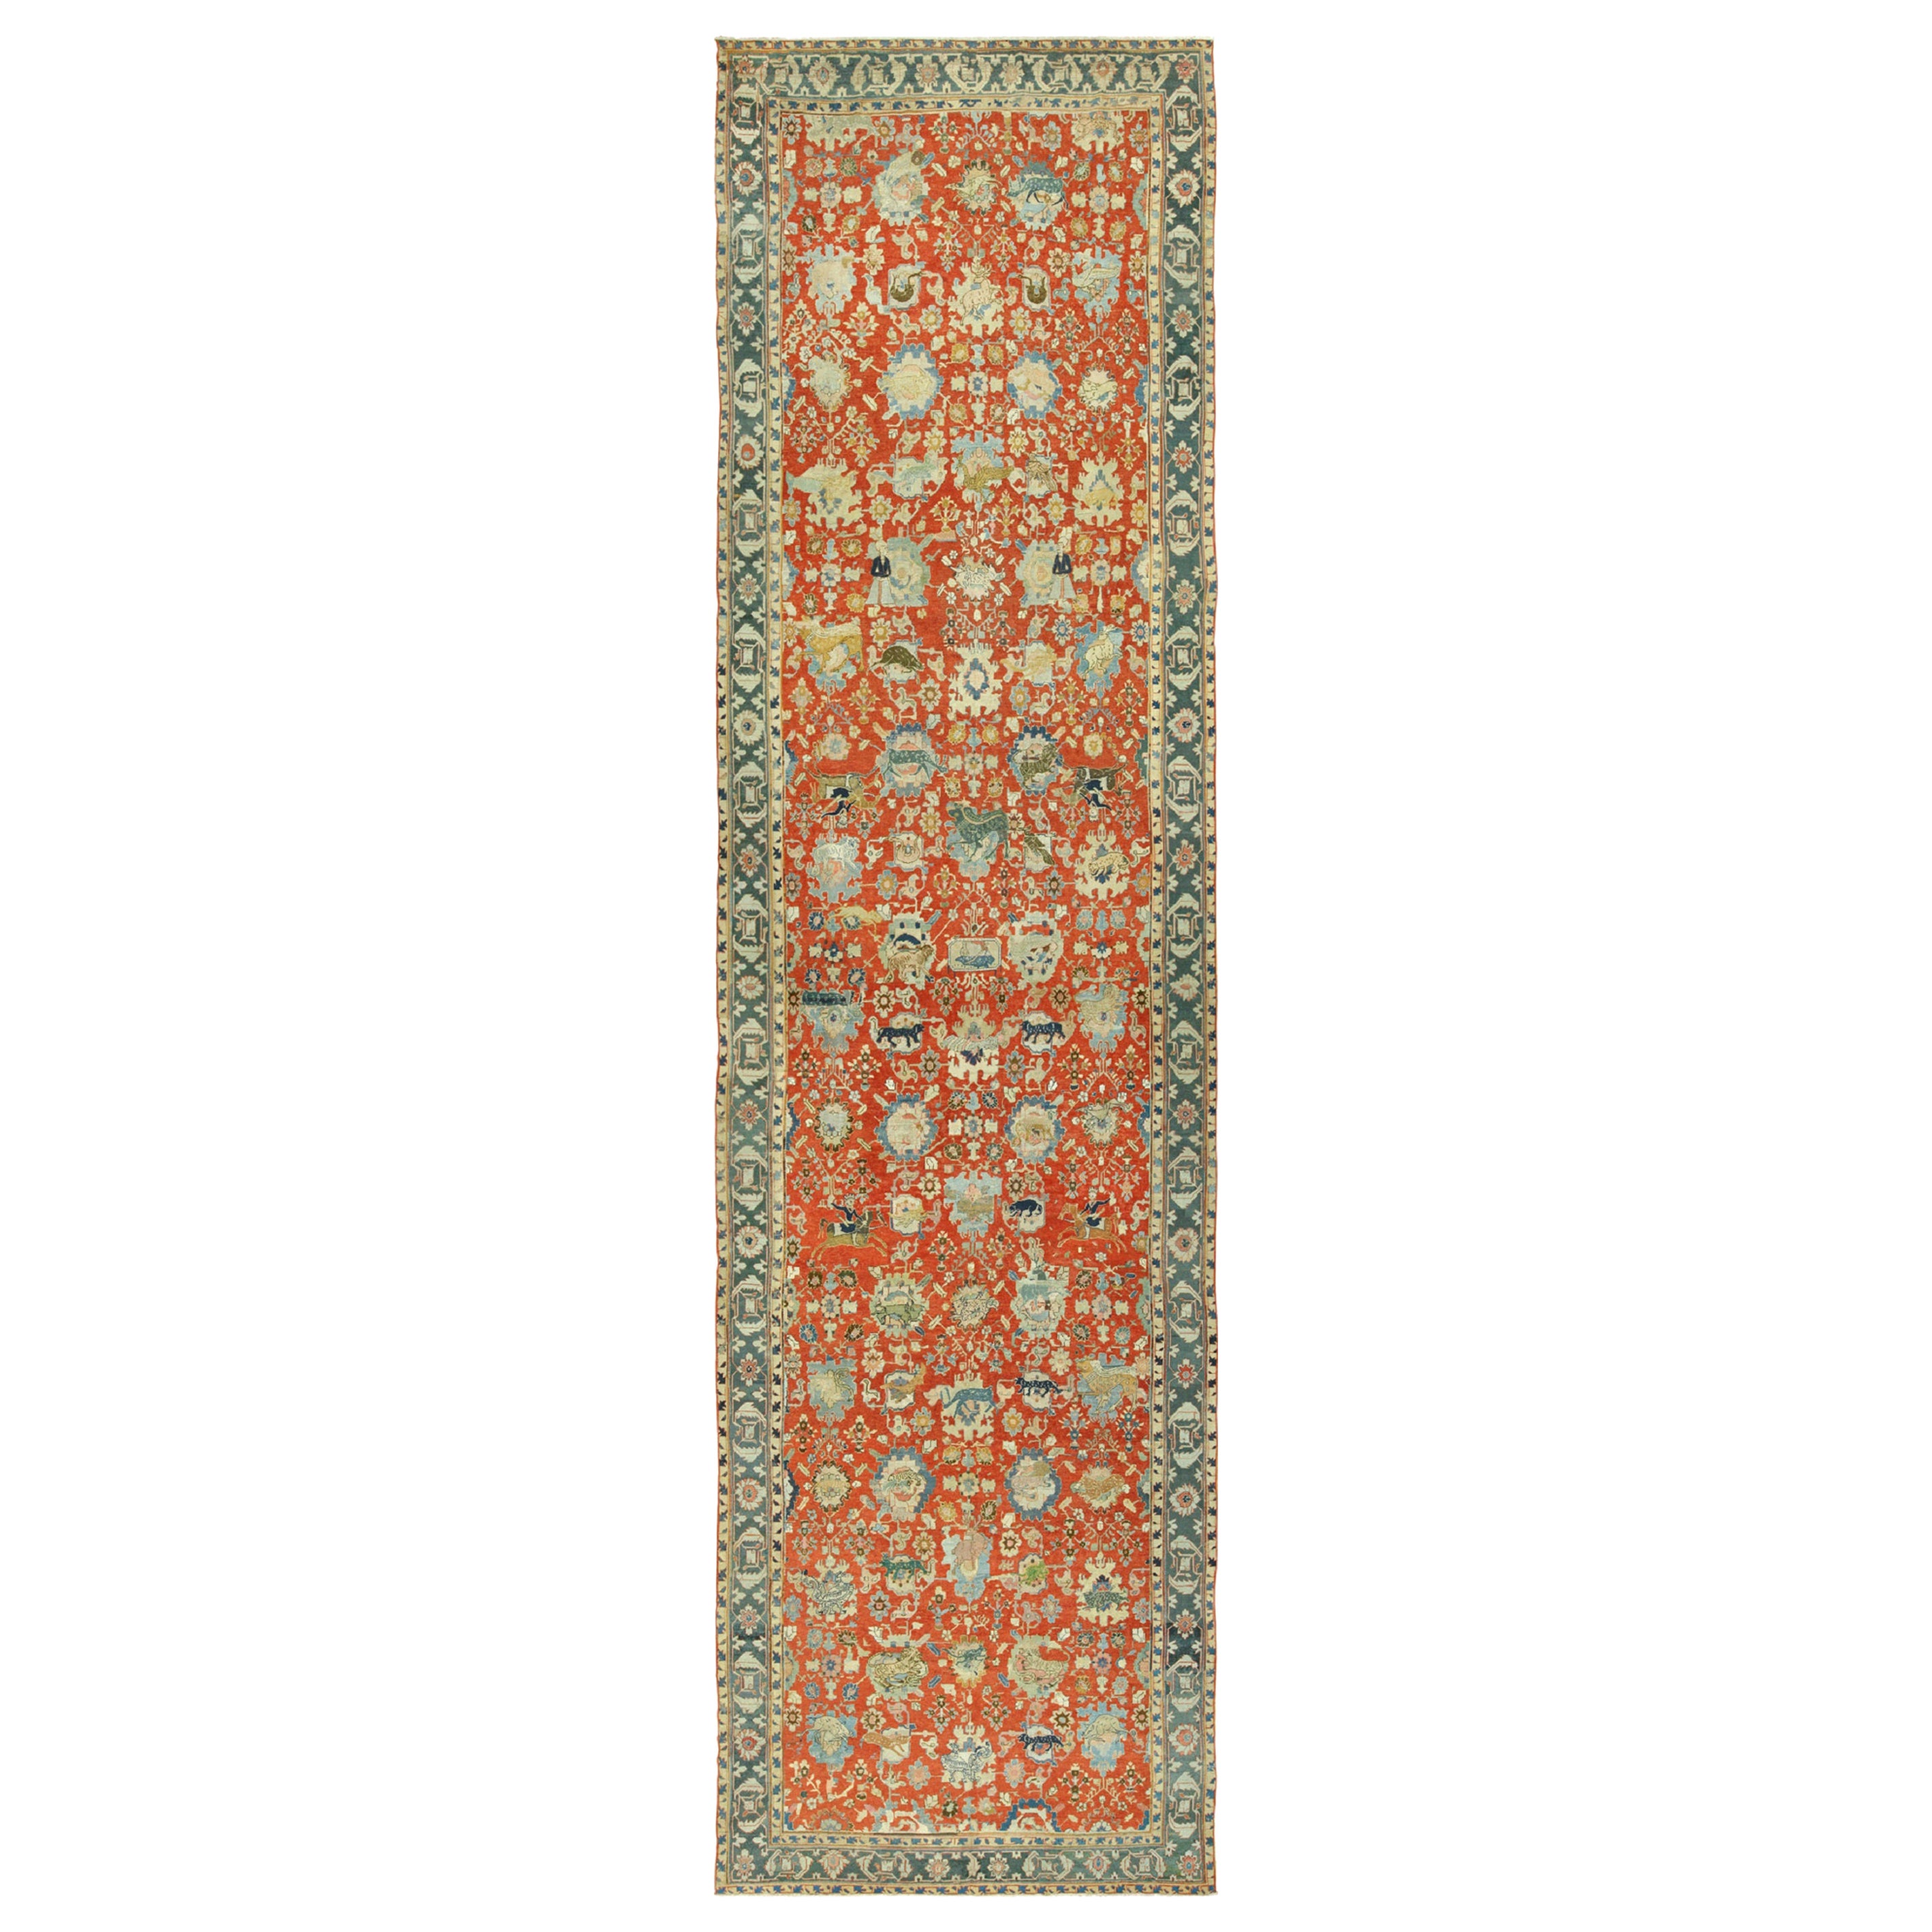 17th Century Persian Rugs